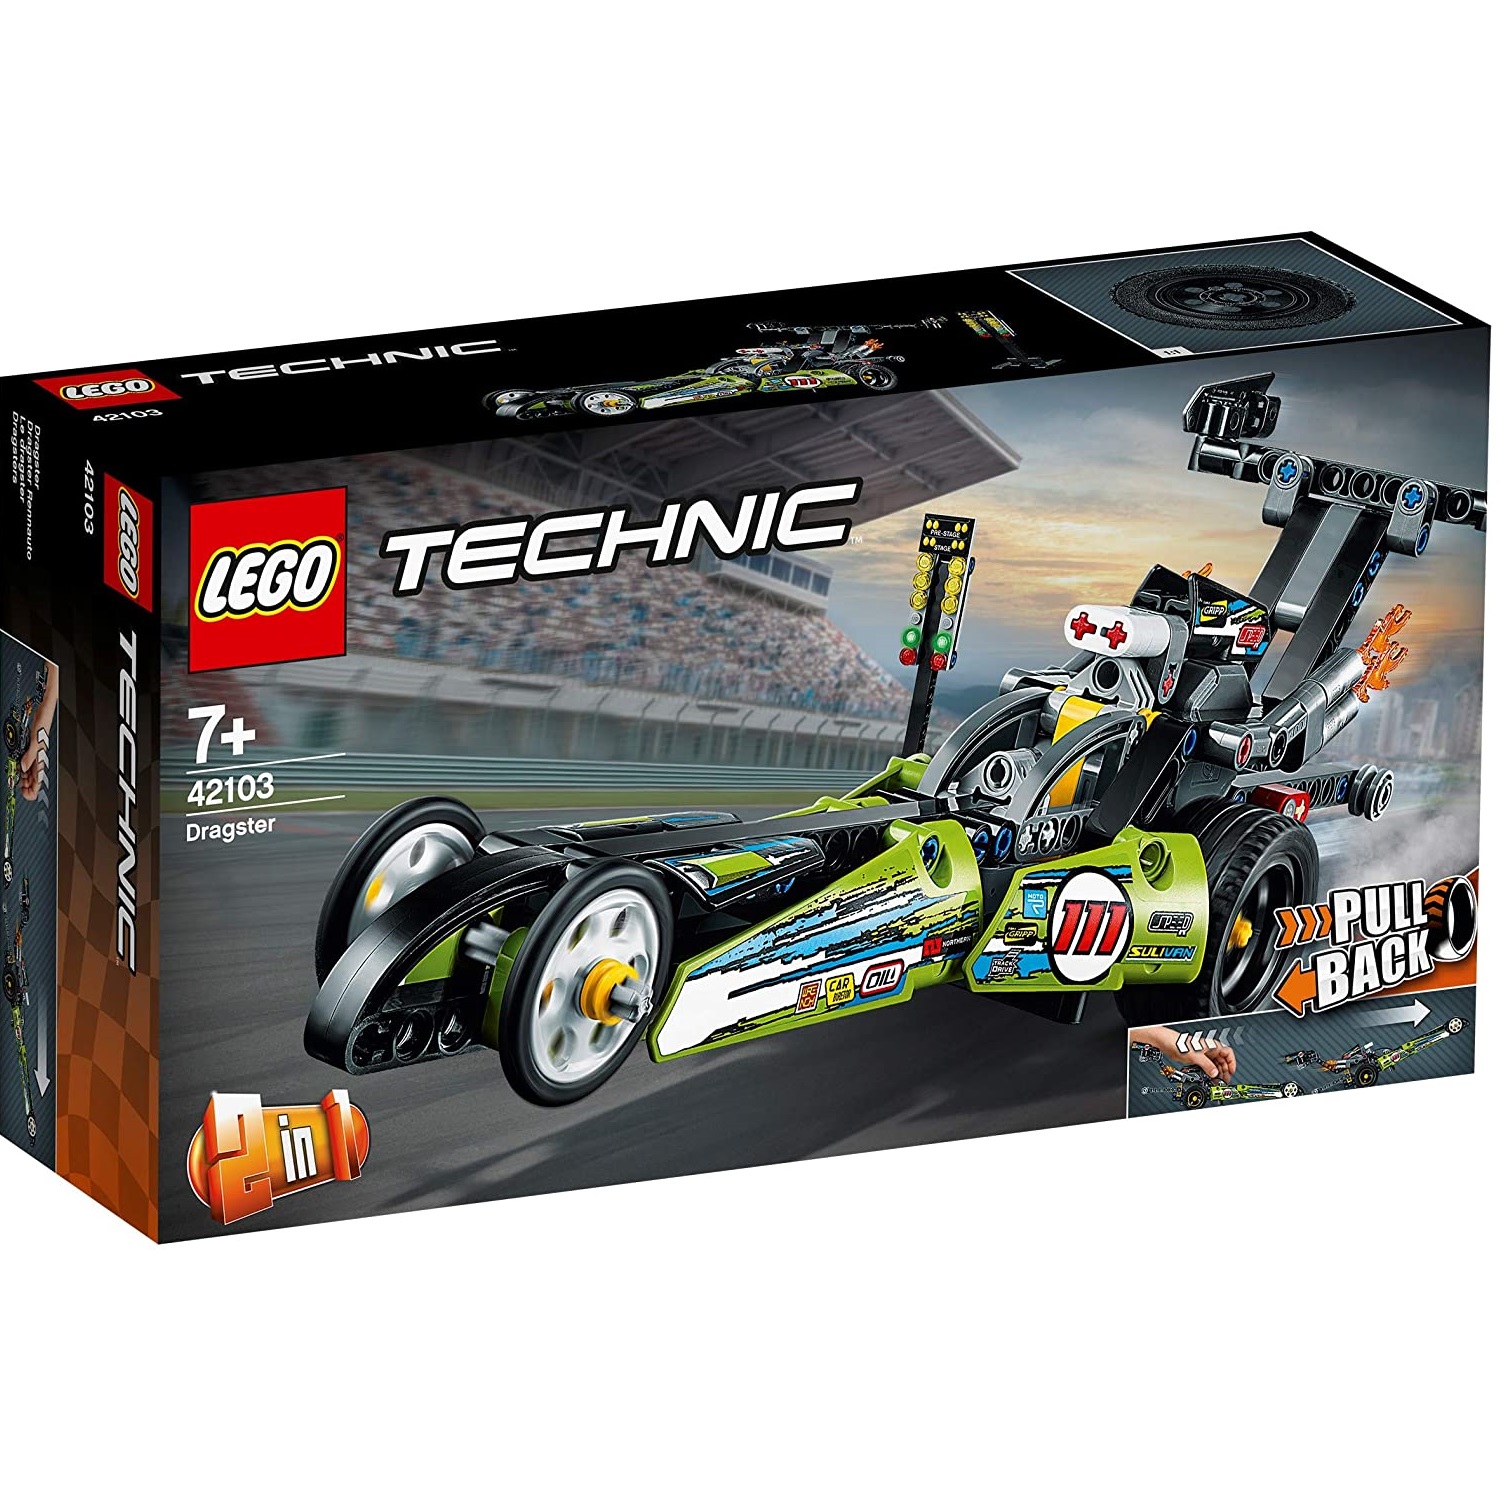 Dragster Lego Technic 42103, 7+ ani, Lego